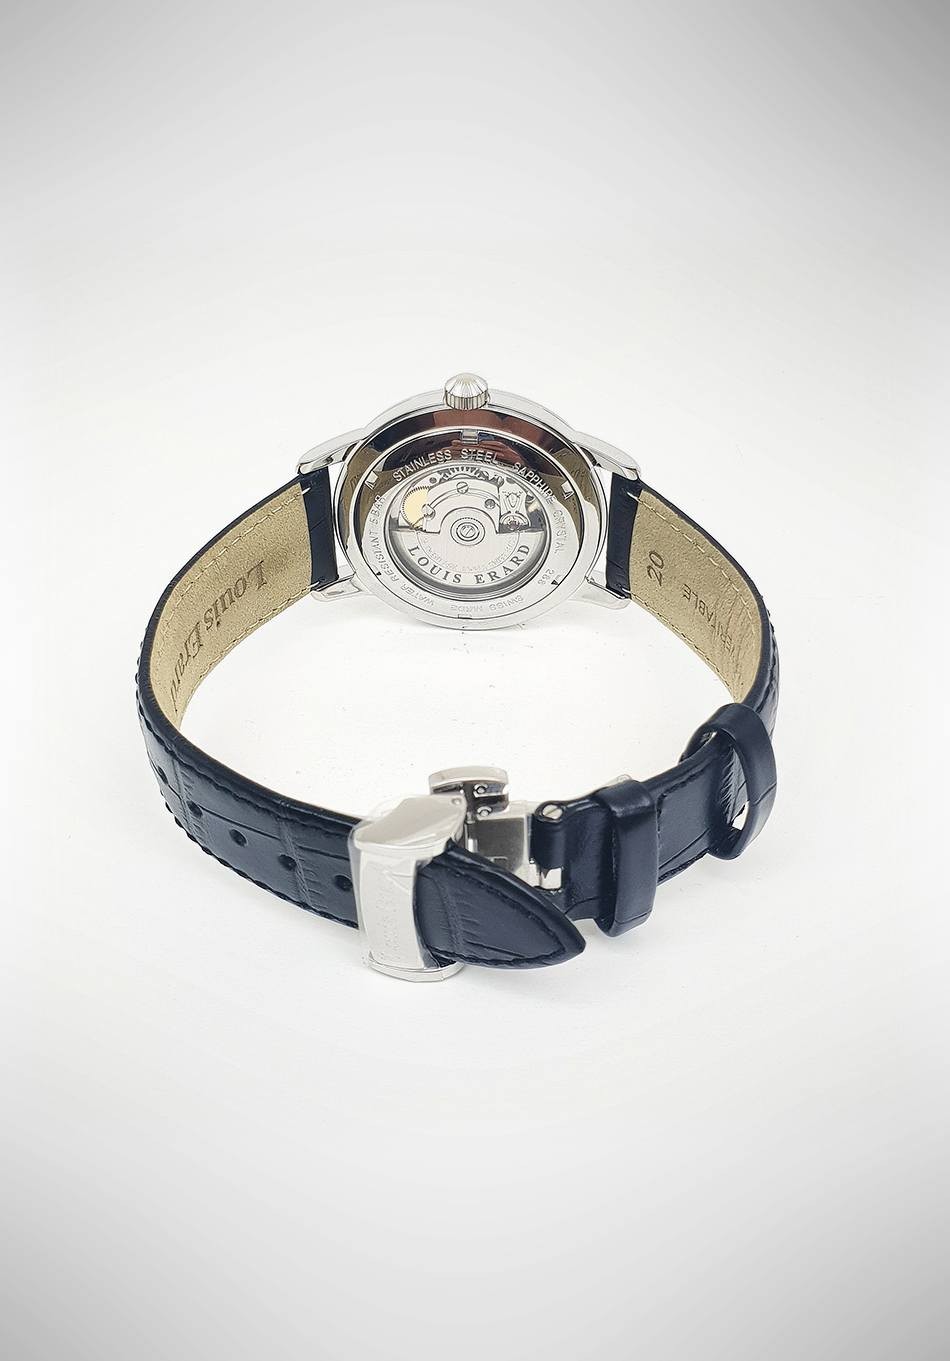 Louis Erard Heritage automatic watch 67278AA15.BMA05 - Gioielleria